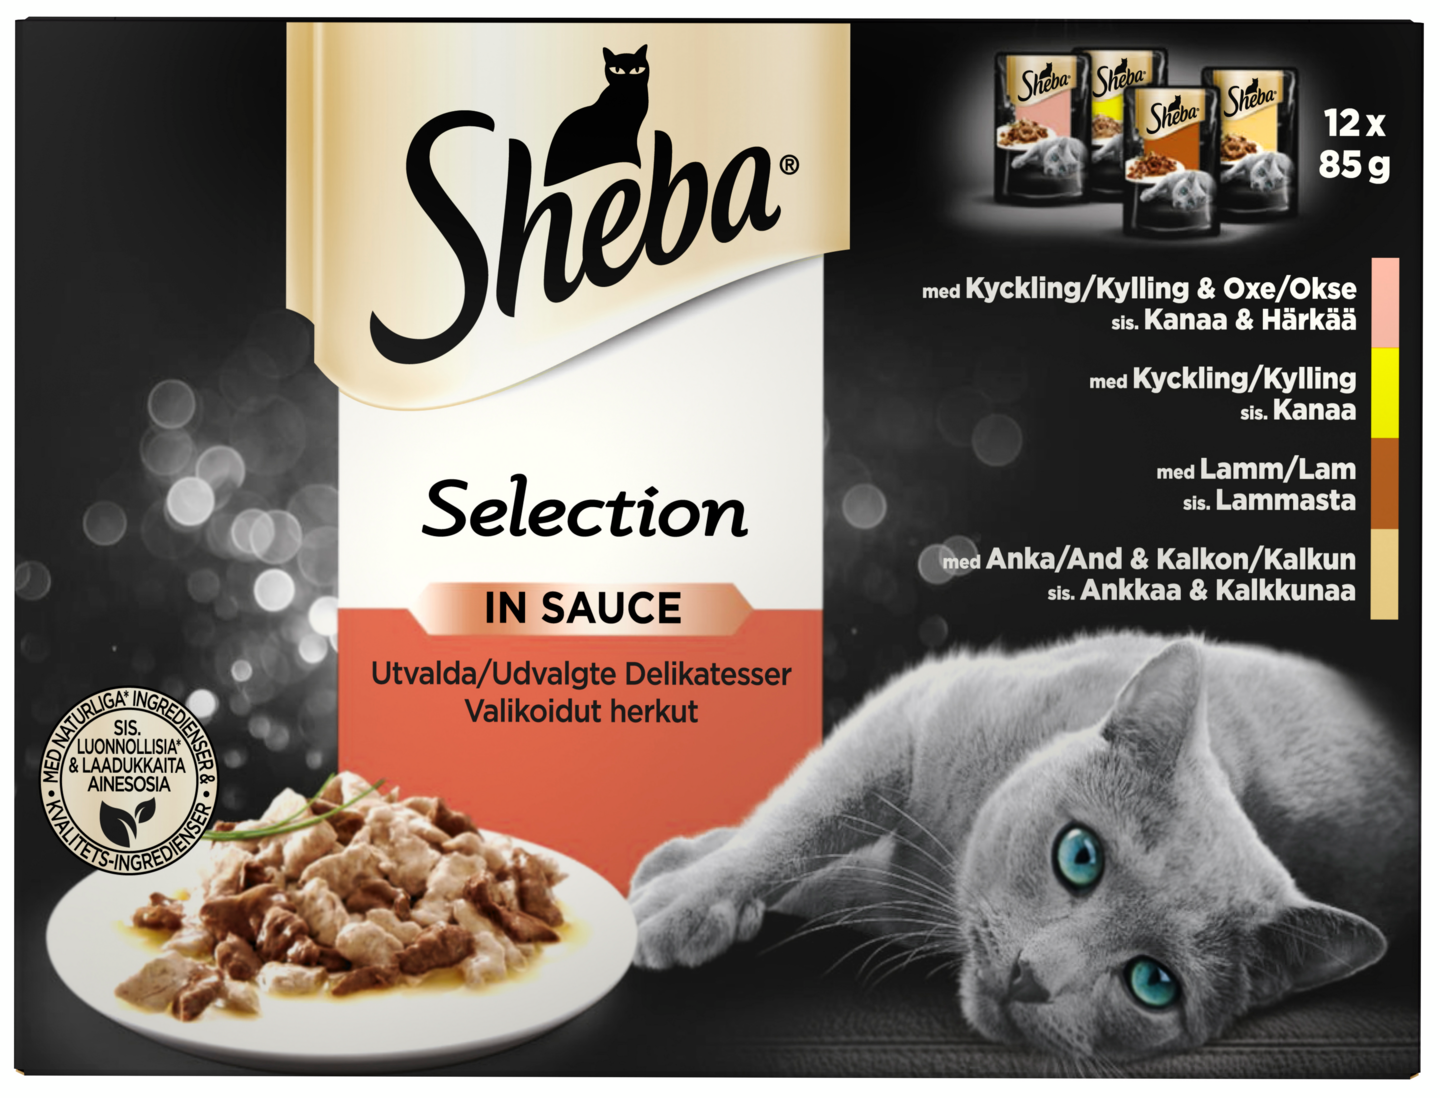 Sheba Select Slices kastikkeessa 12x85g lihaisa